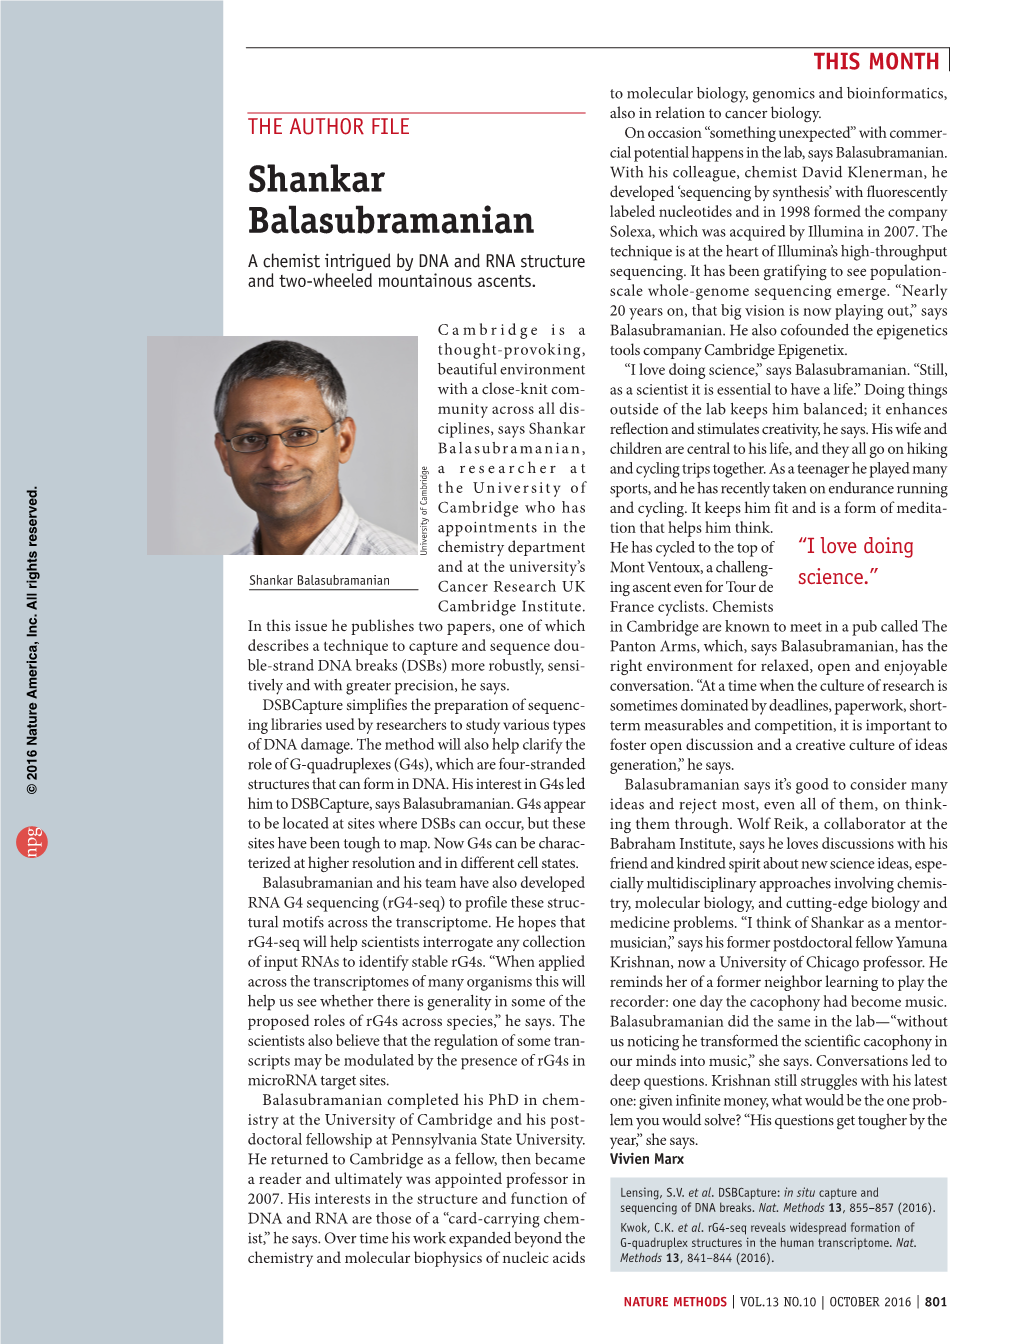 Shankar Balasubramanian Science.” Cancer Research UK Ing Ascent Even for Tour De Cambridge Institute